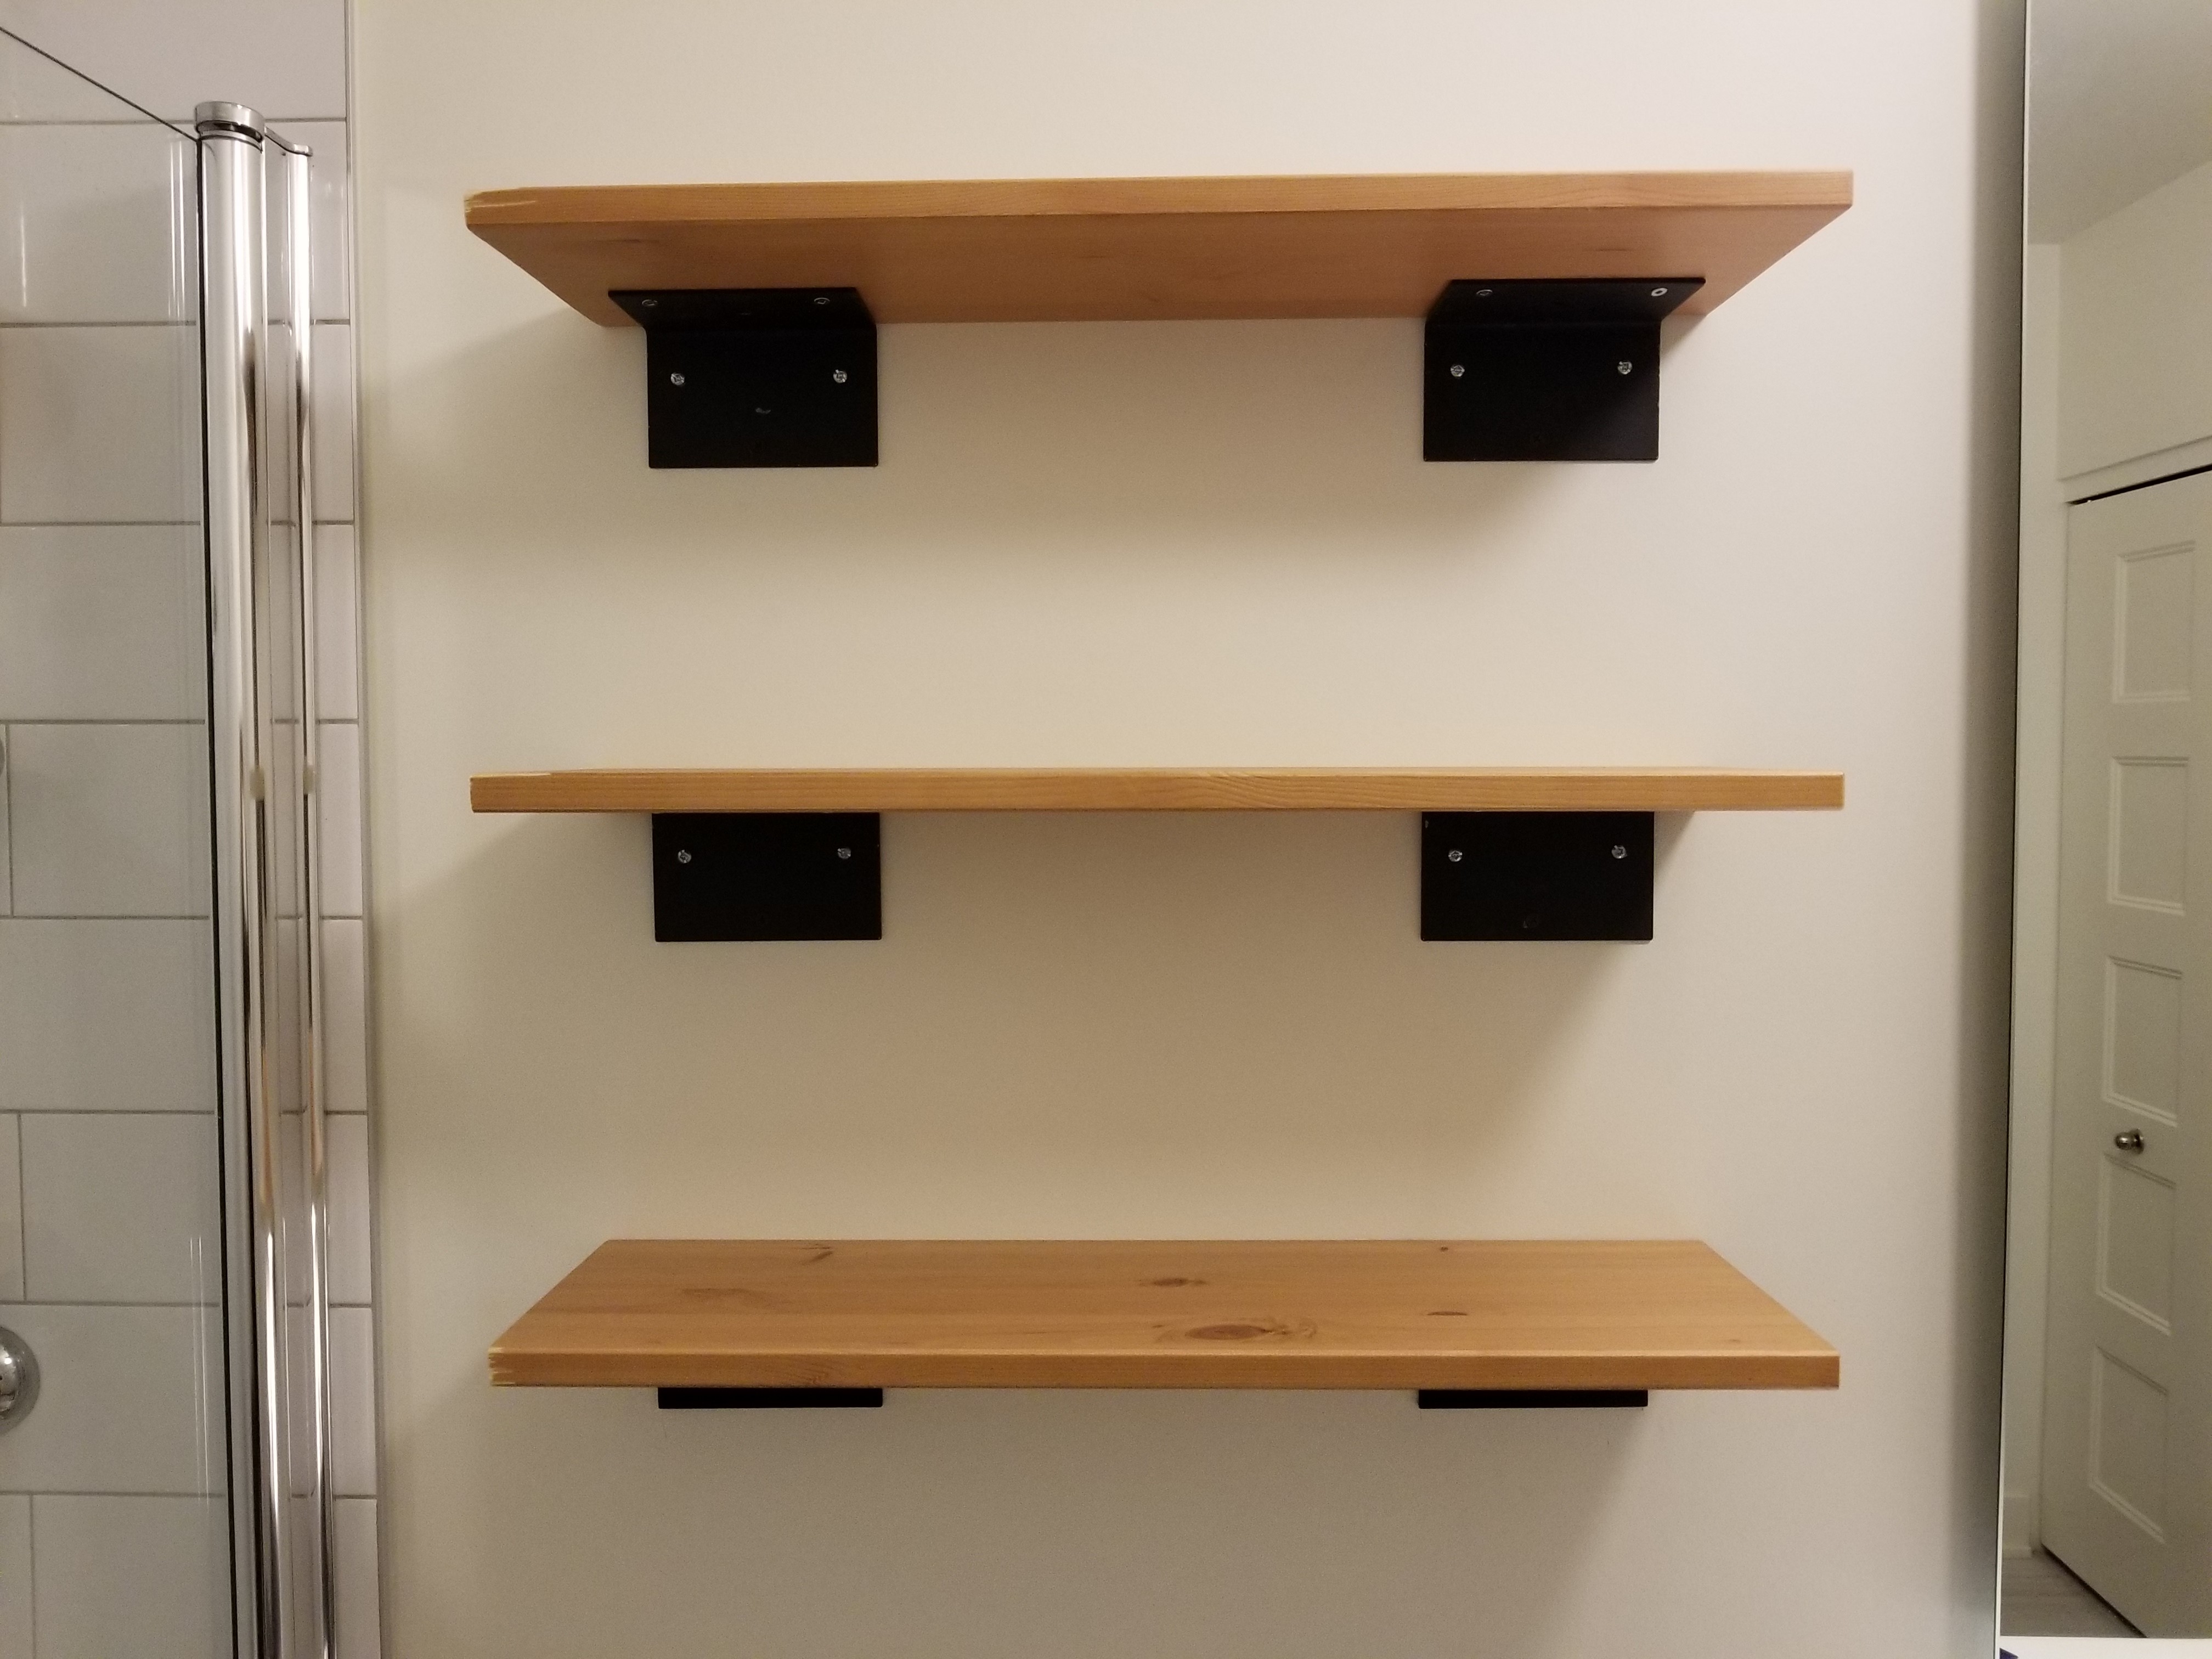 Ikea Wall Shelves: How to Hang Shelves in 3 Easy Steps